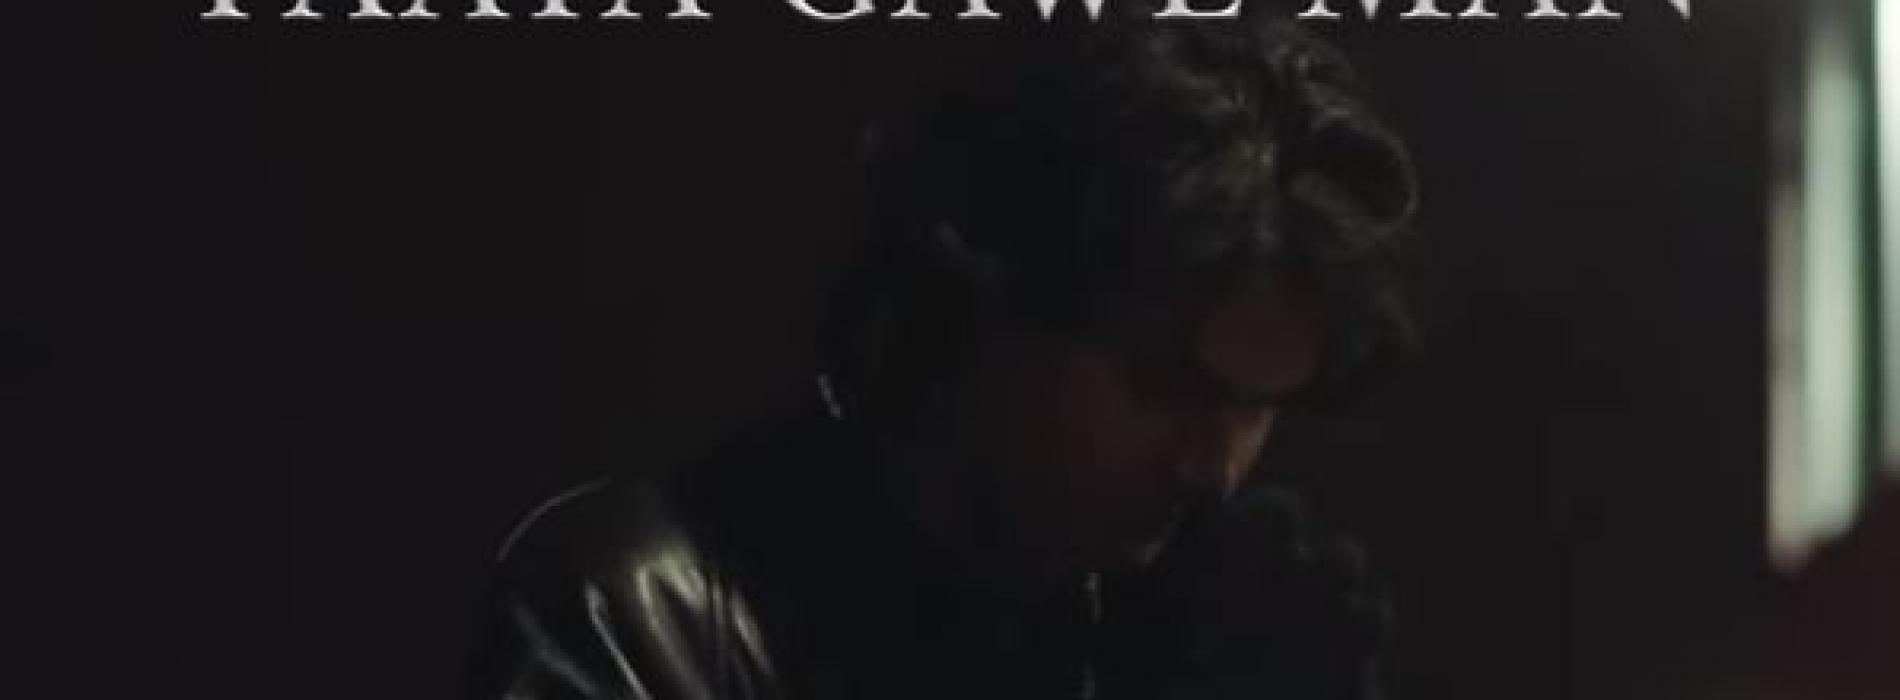 New Music : Duava – Paata Gawe Man (Official Music Video)